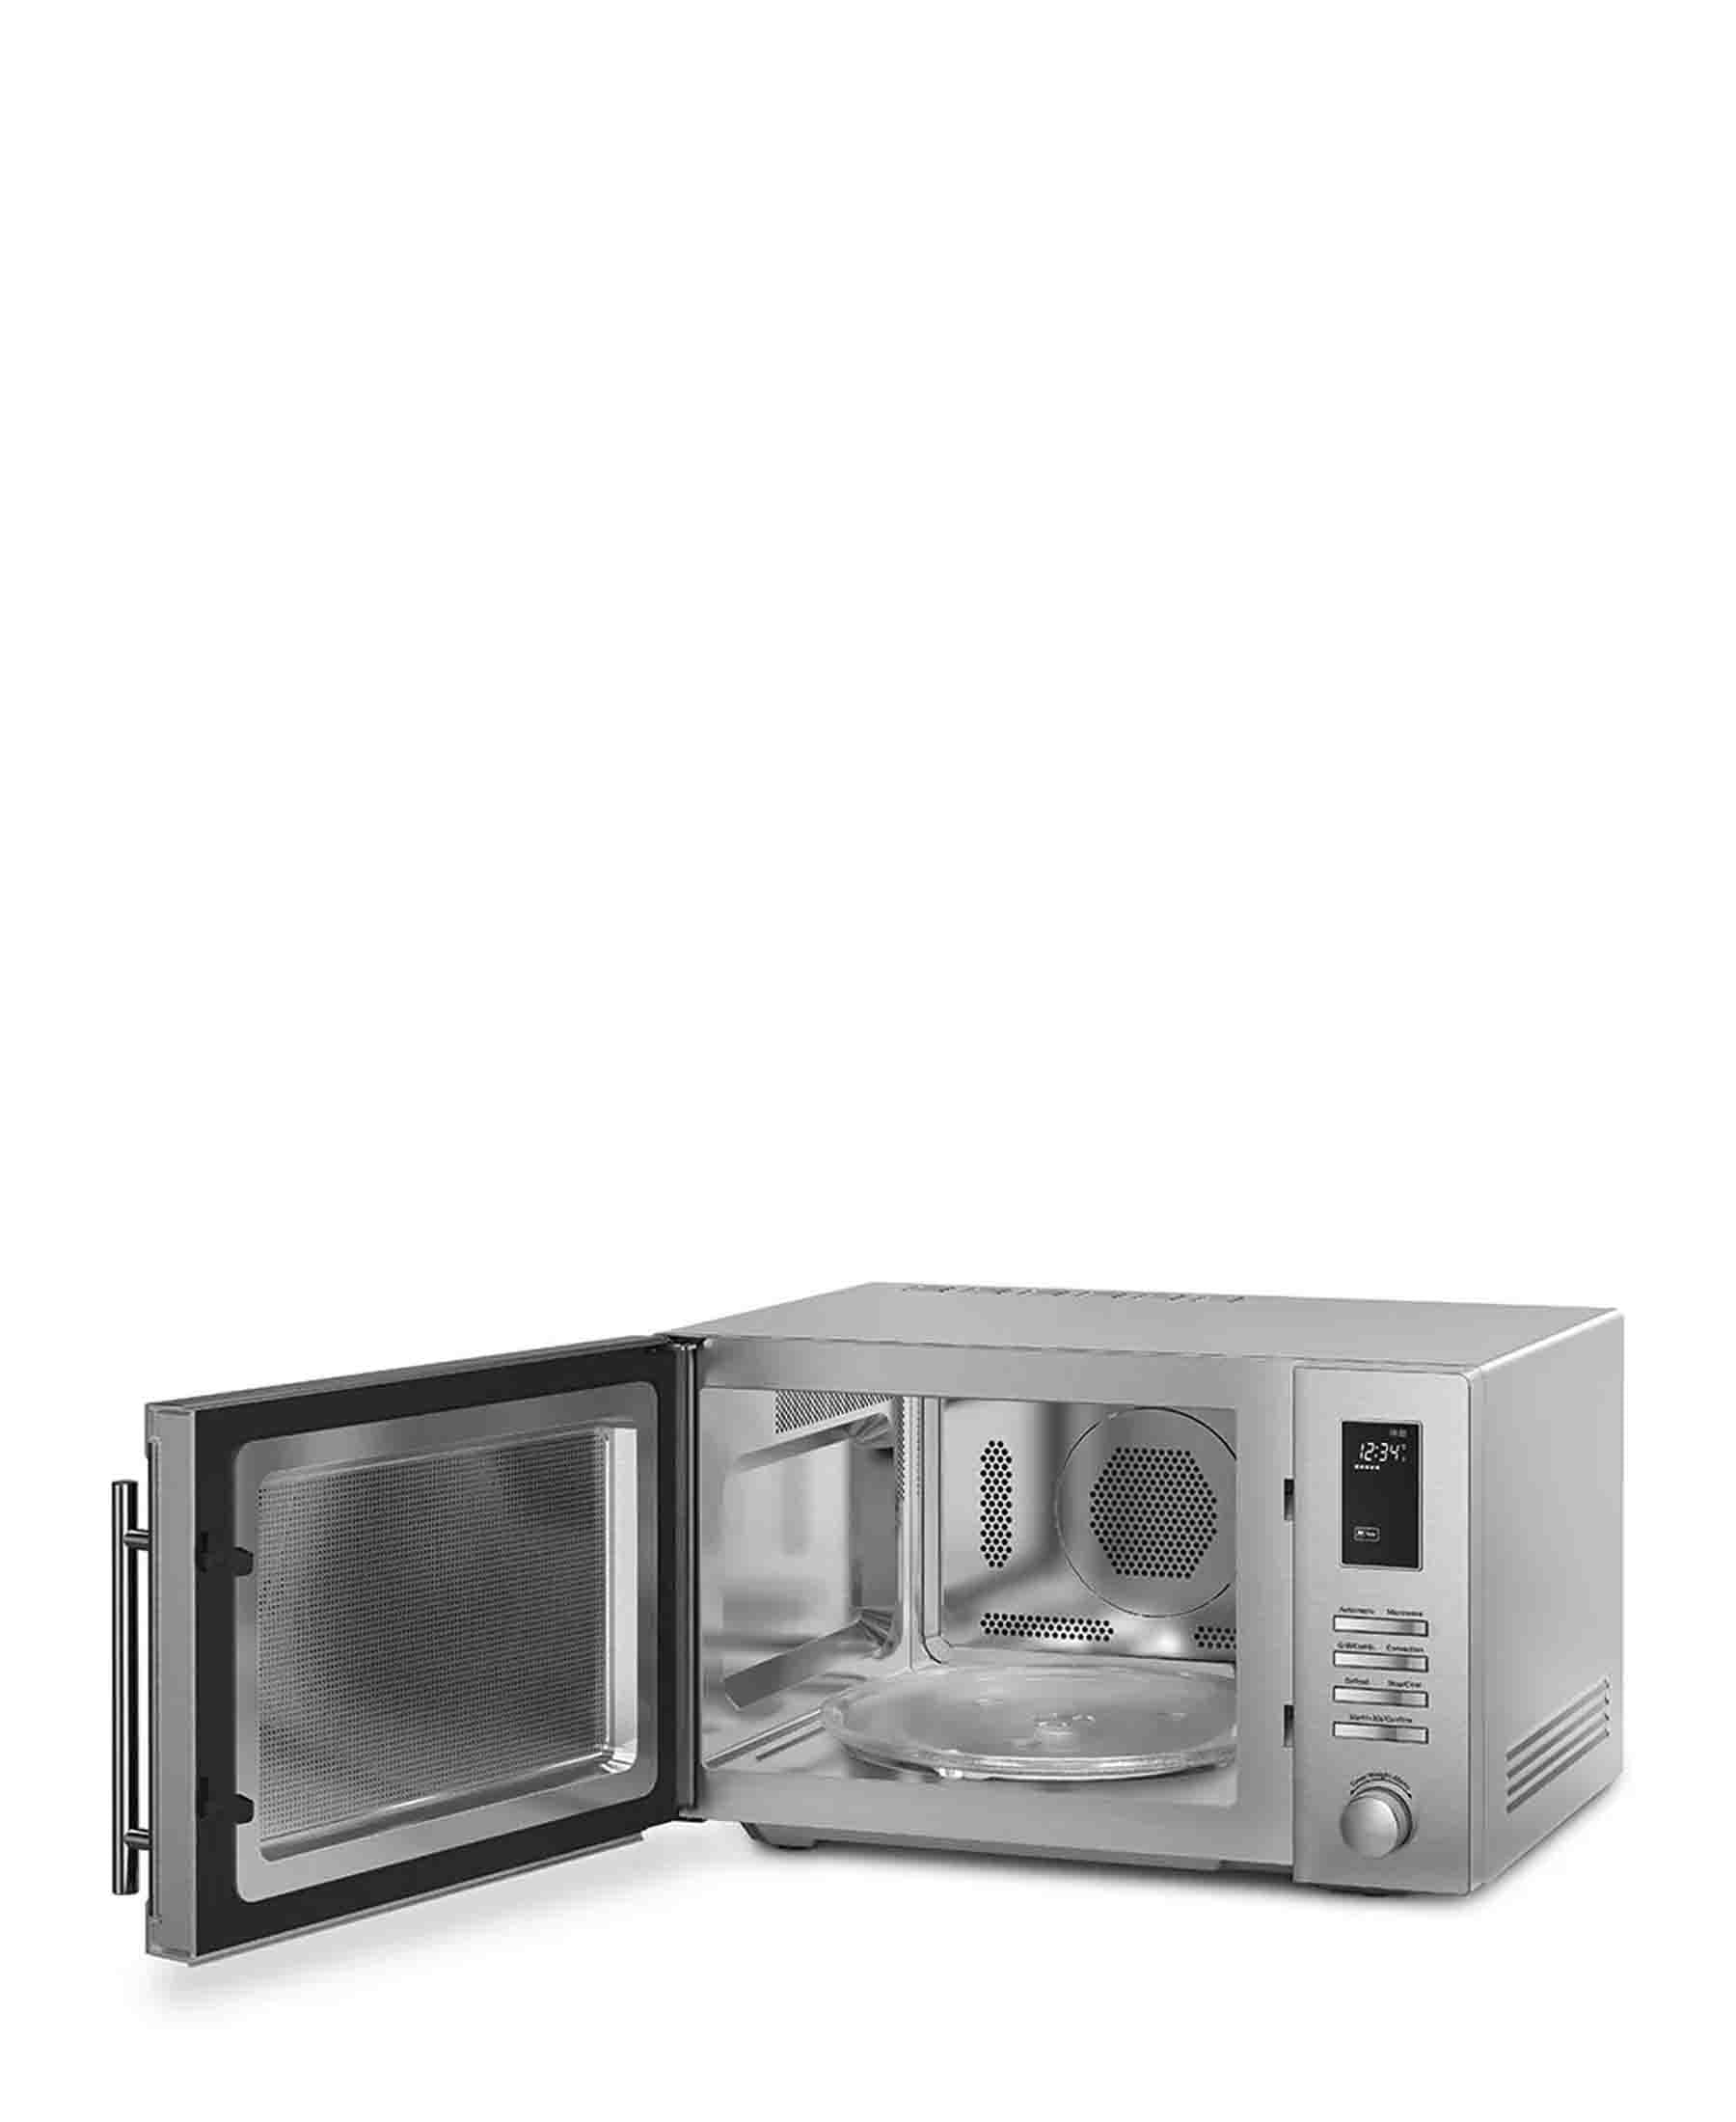 Smeg 34Lt Countertop Combination Microwave Oven - Silver